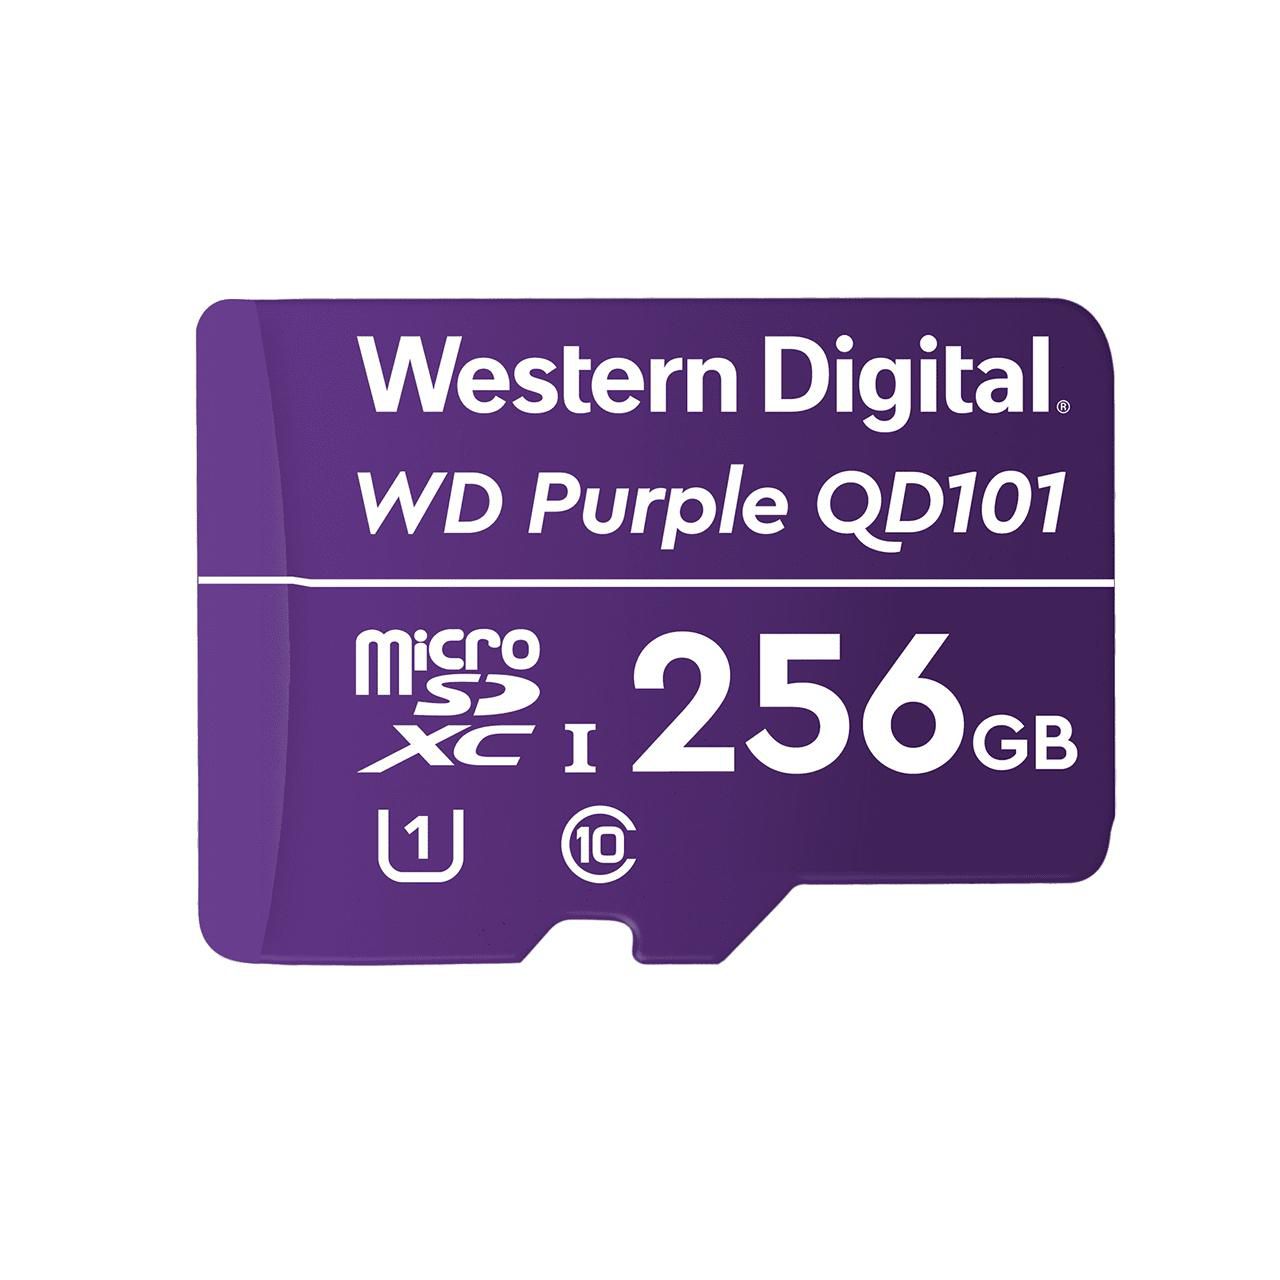 WESTERN DIGITAL WD PURPLE QD101 MICROSD 256GB